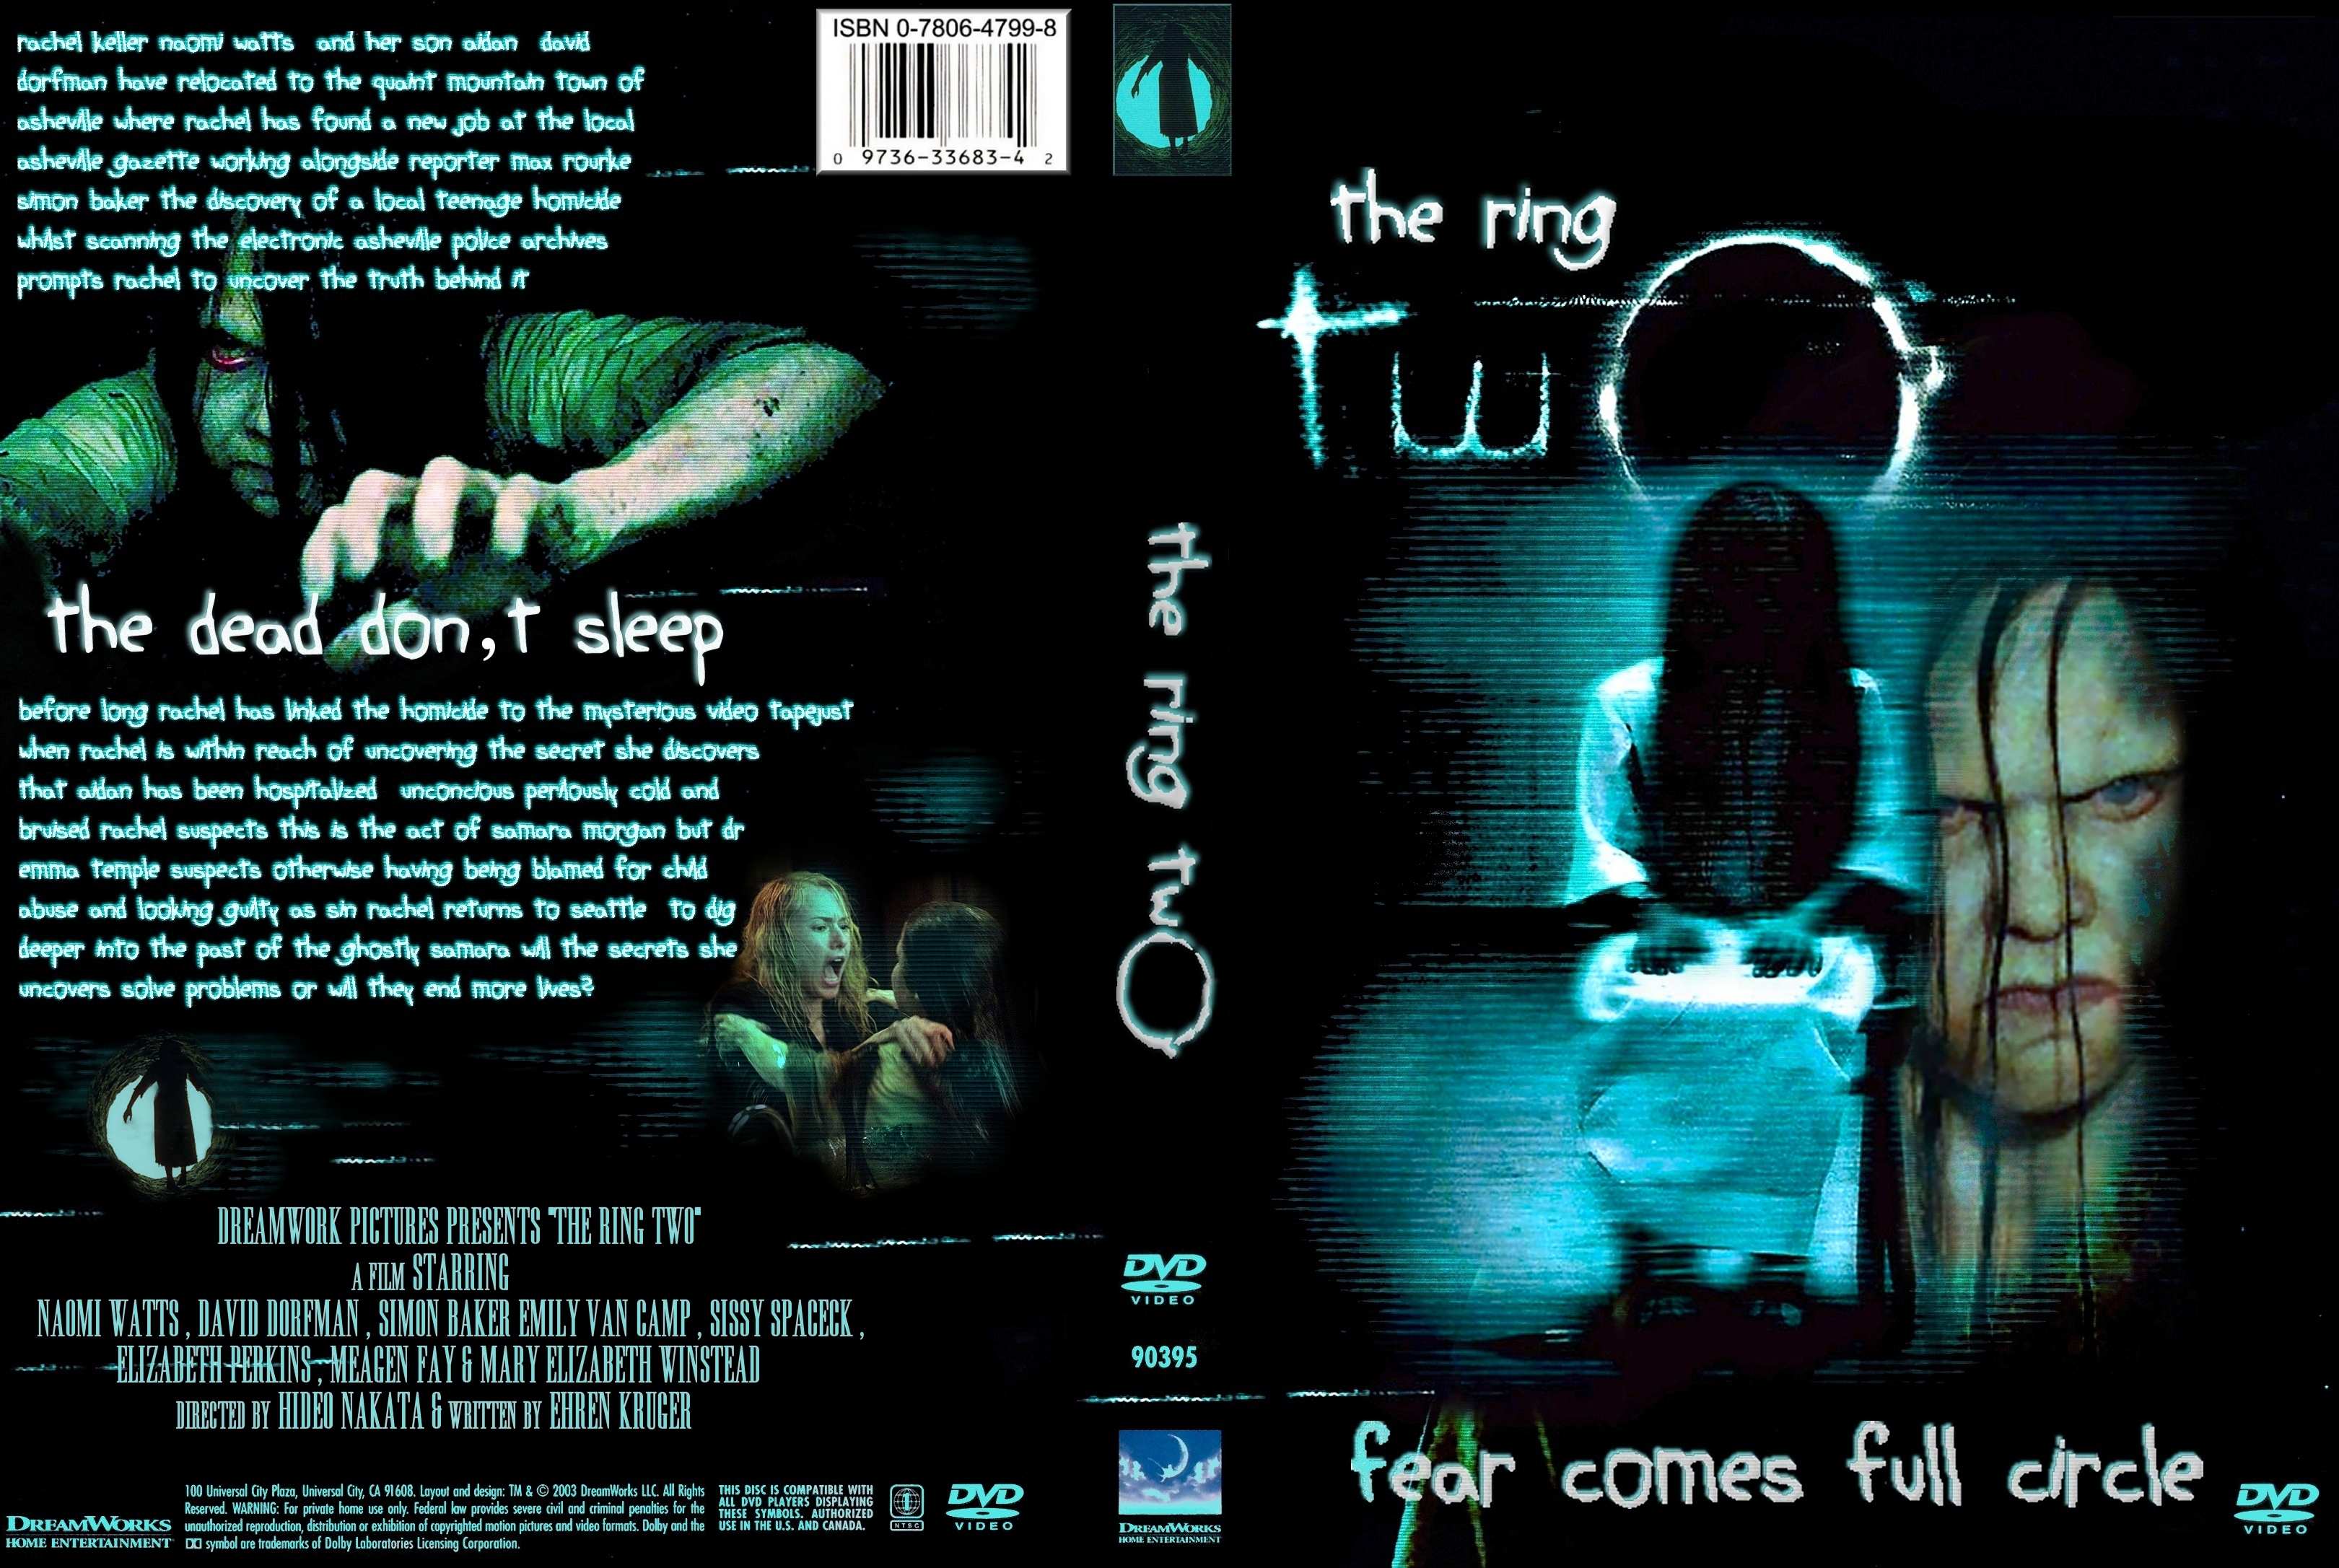 Canoa músico Instalaciones COVERS.BOX.SK ::: Ring 2, The (2004) - high quality DVD / Blueray / Movie